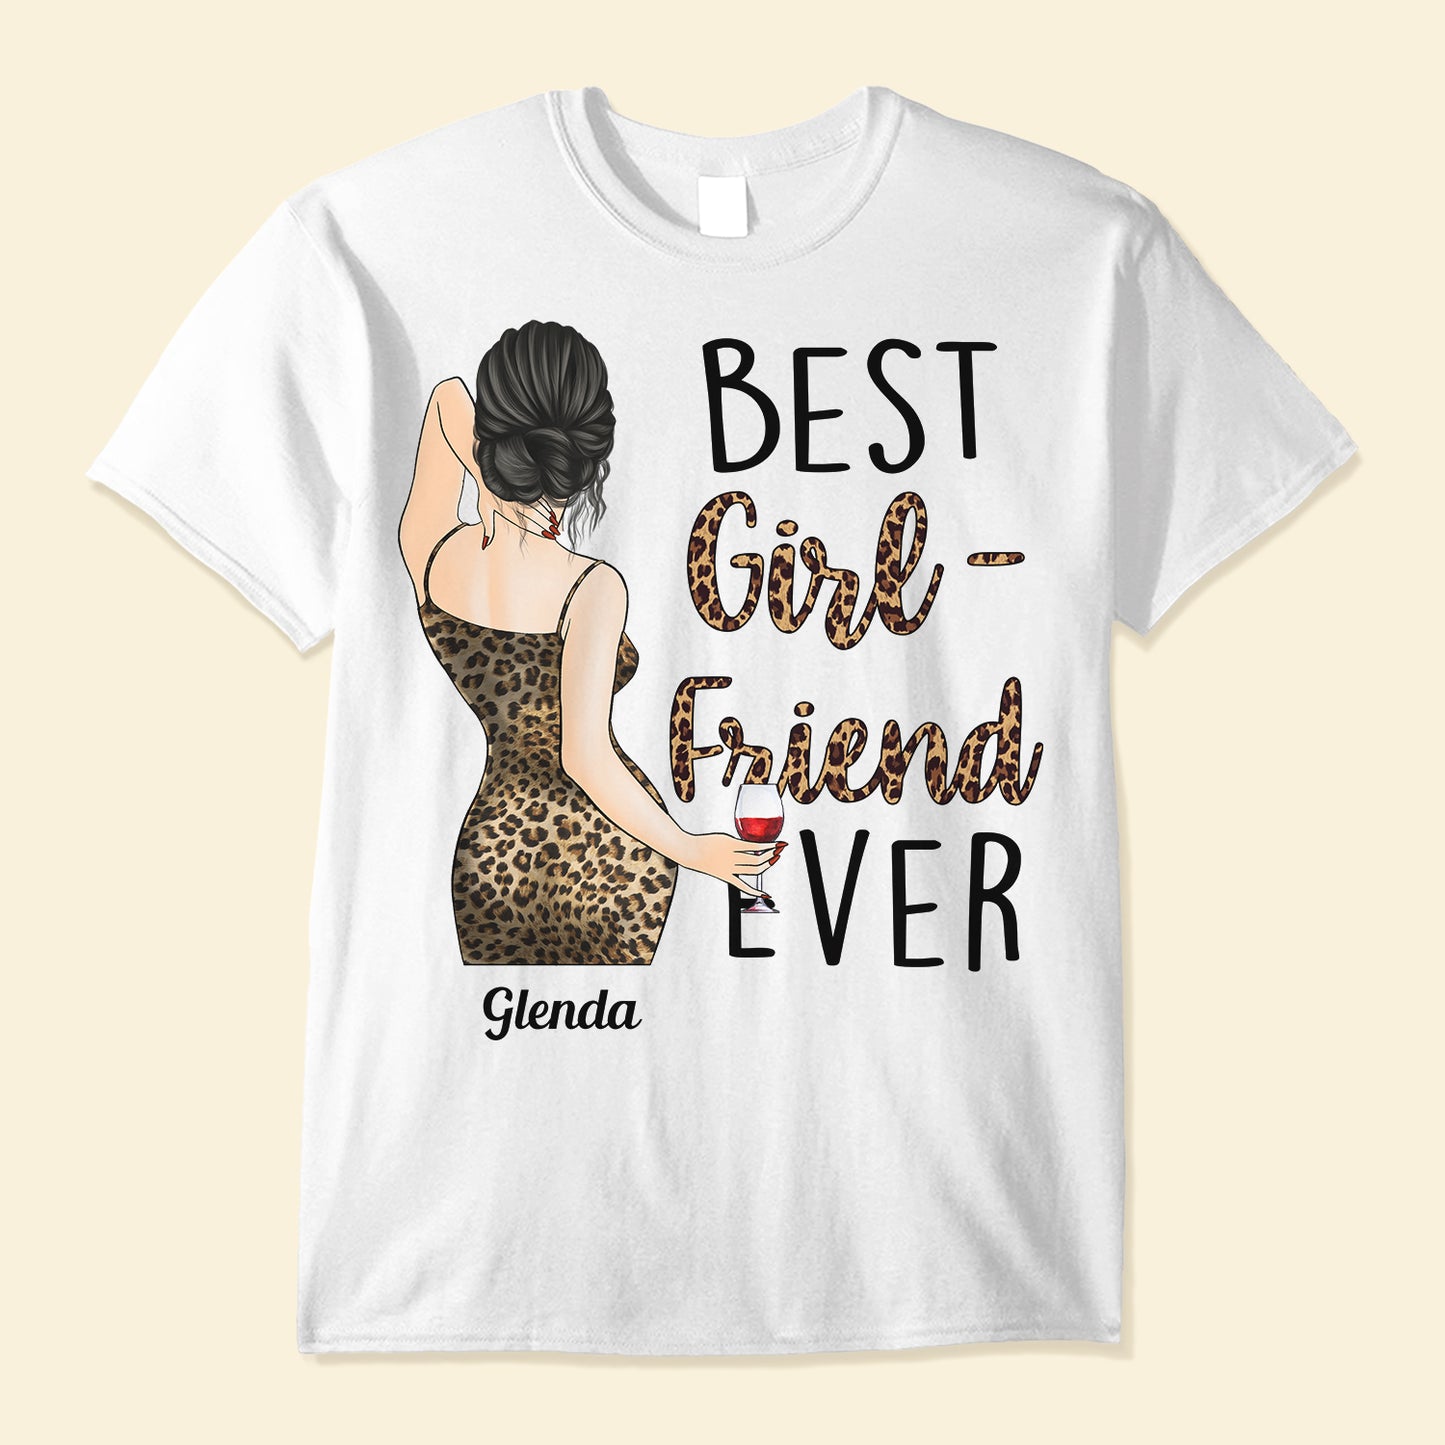 Best Girlfriend Ever - Personalized Shirt - Birthday, Anniversary, Valentine's Gift For Girlfriend, Lover, Honey - Sexy Woman